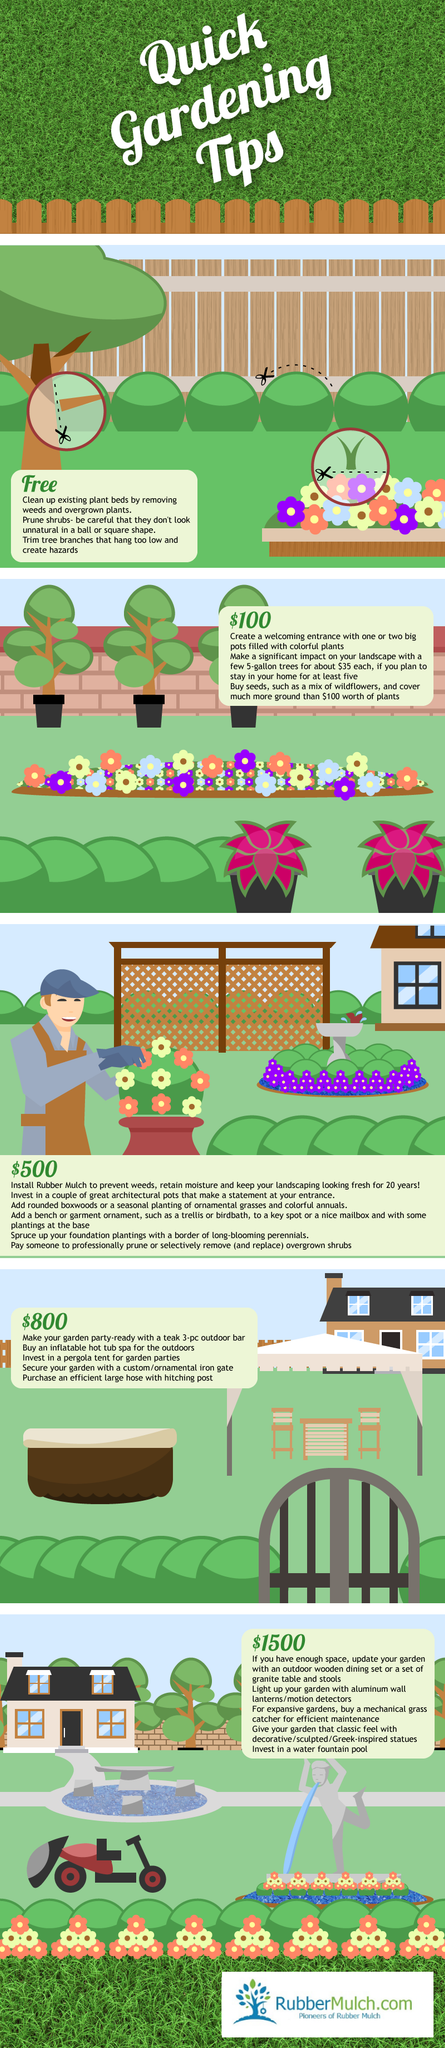 quick gardening tips infographic